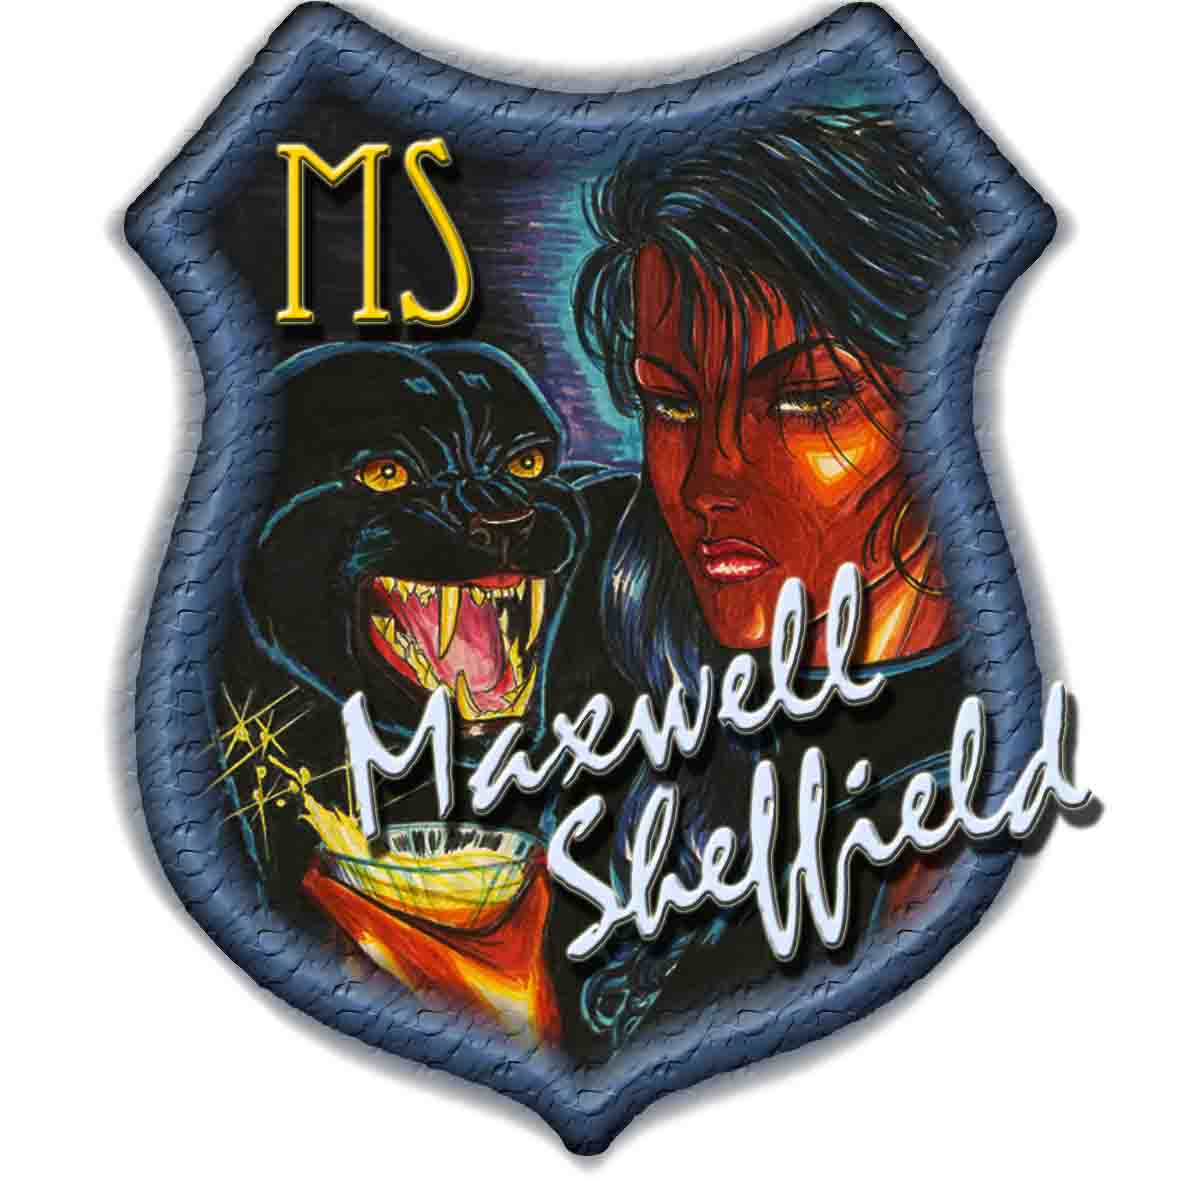 Maxwell Sheffield